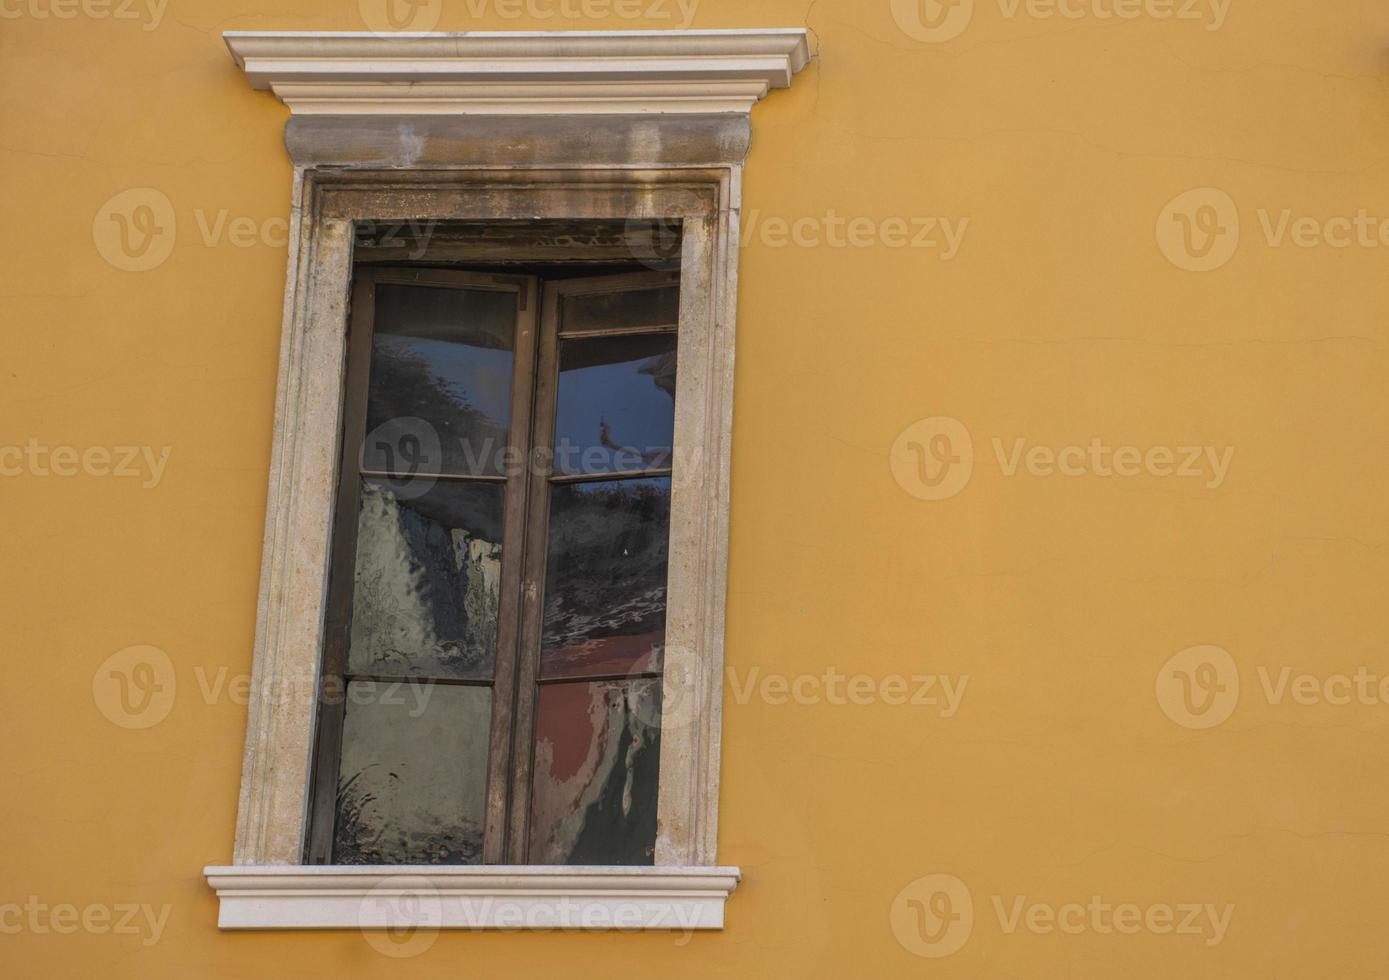 ventana en pared ocre foto